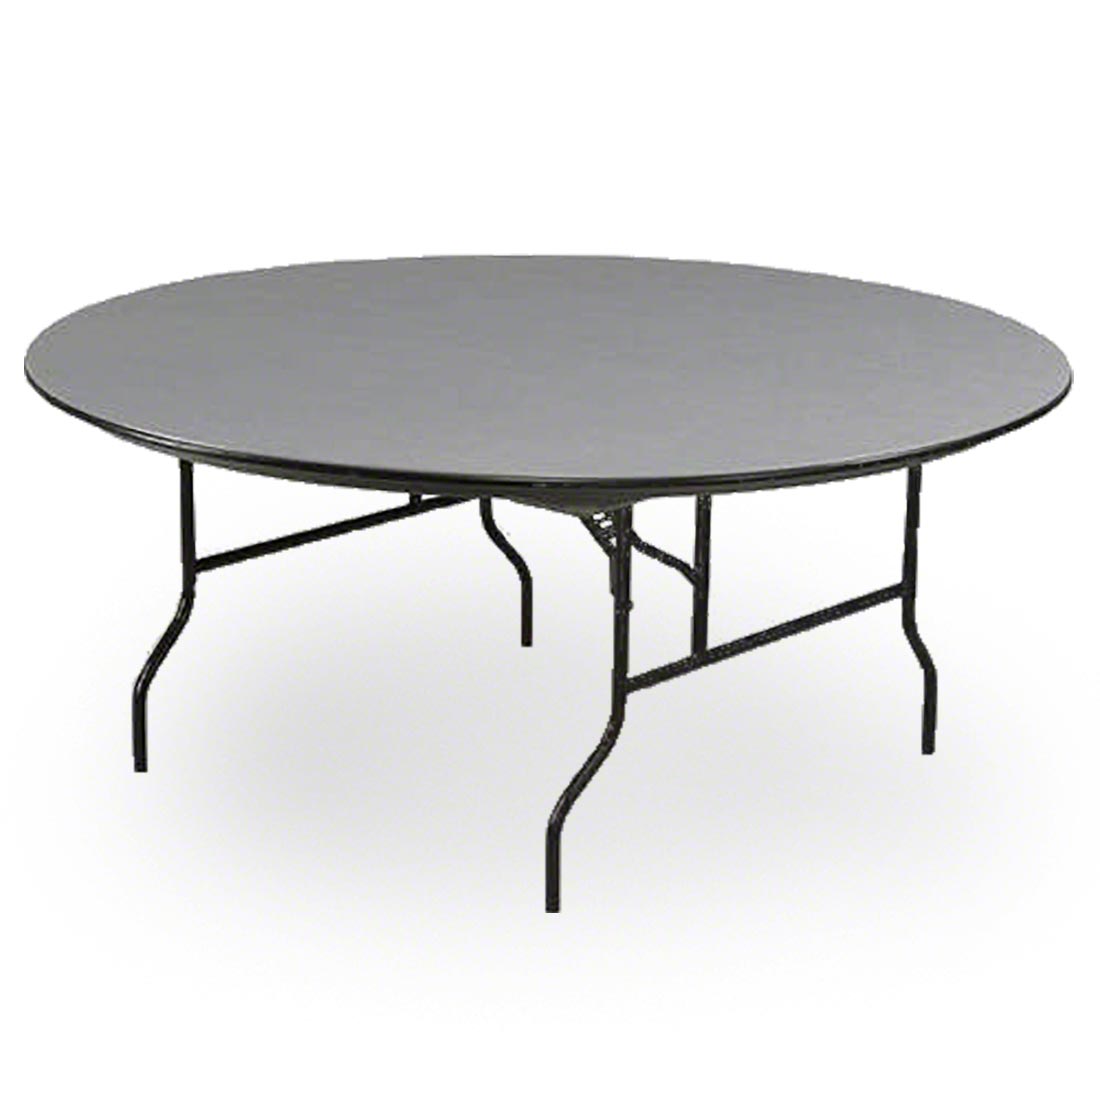 72 round folding table